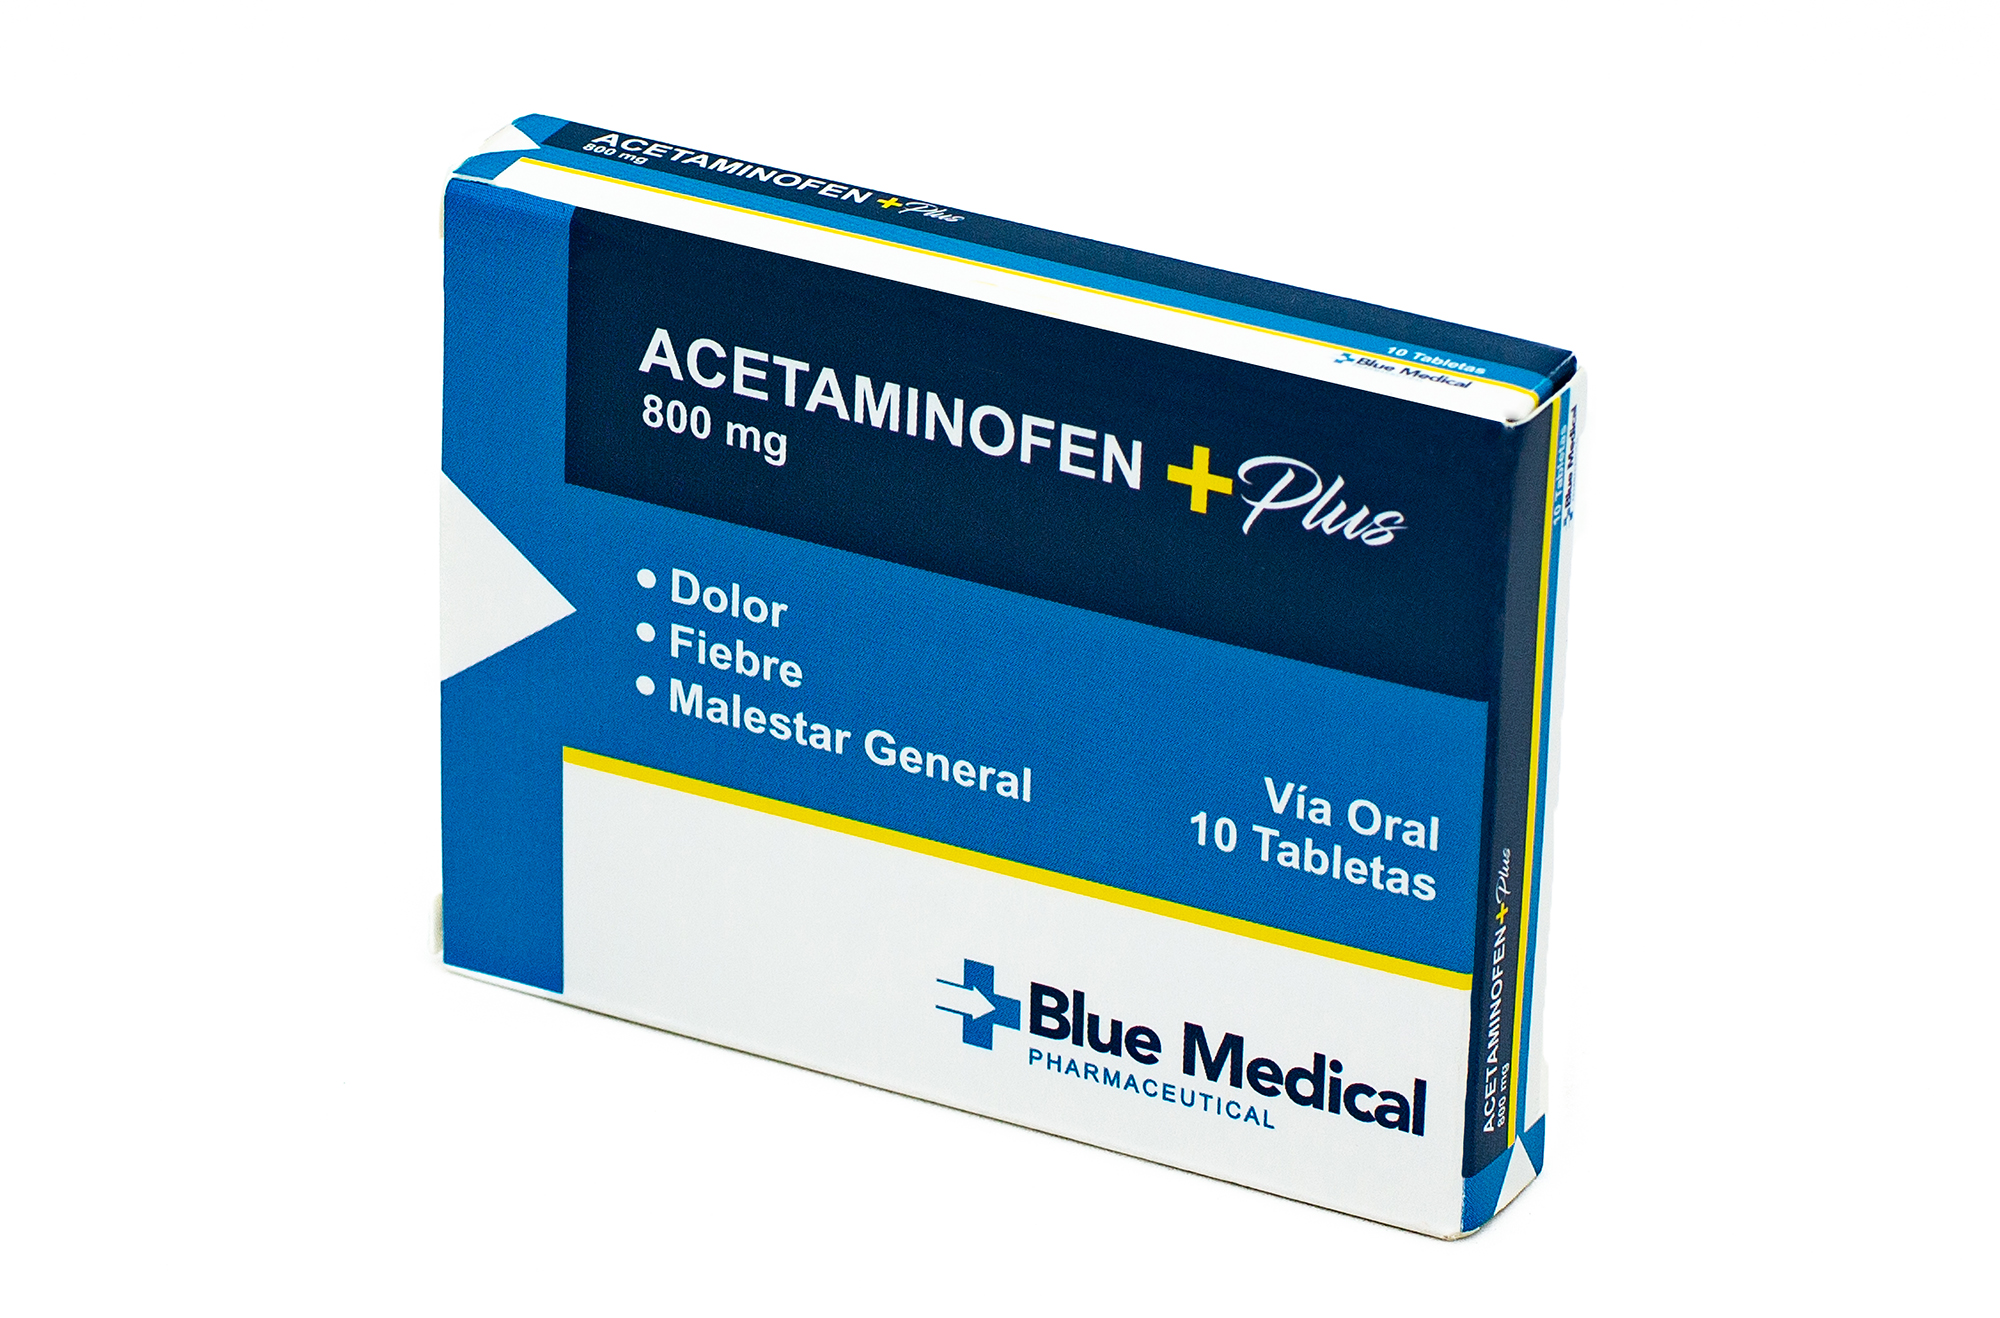 Blue Medical Pharmaceutical